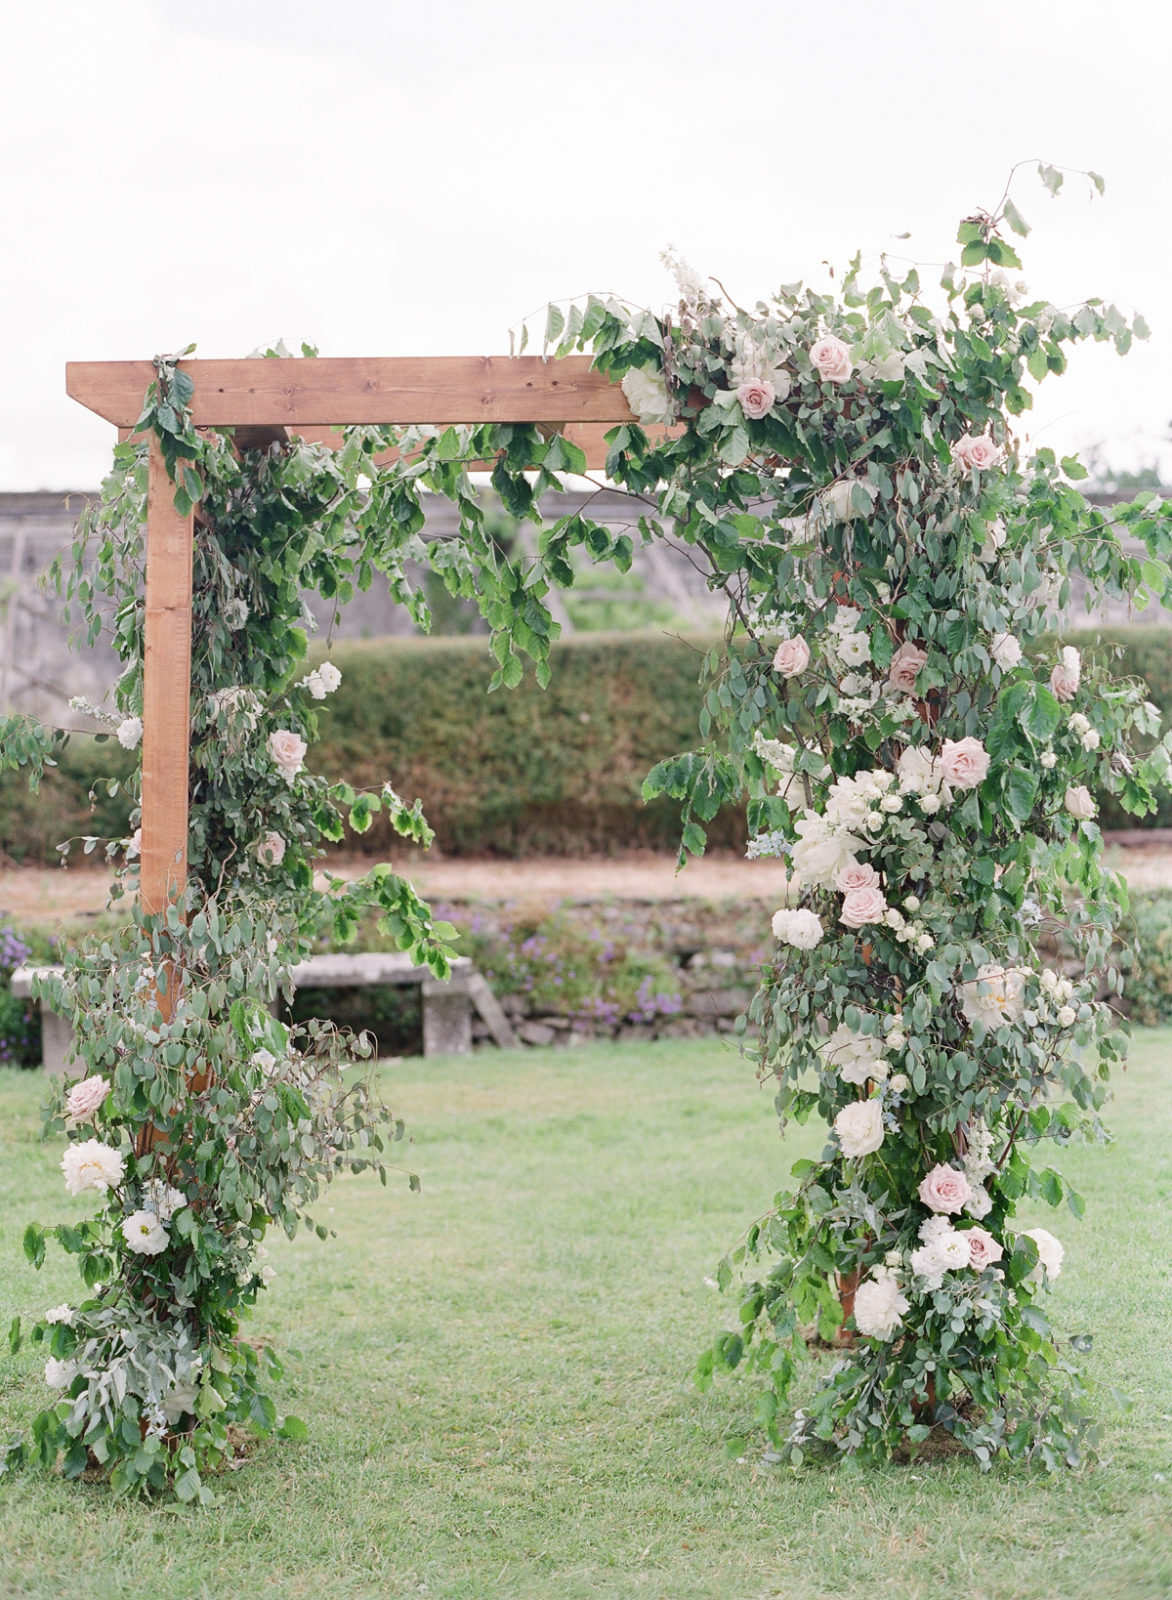 Mount Juliet Estate Wedding Photographer | Ireland Destination Wedding | Molly Carr Photography | Europe Film Photographer | Waterlily Weddings | Ceremony Arch | Garden Ceremony | Floral Arch